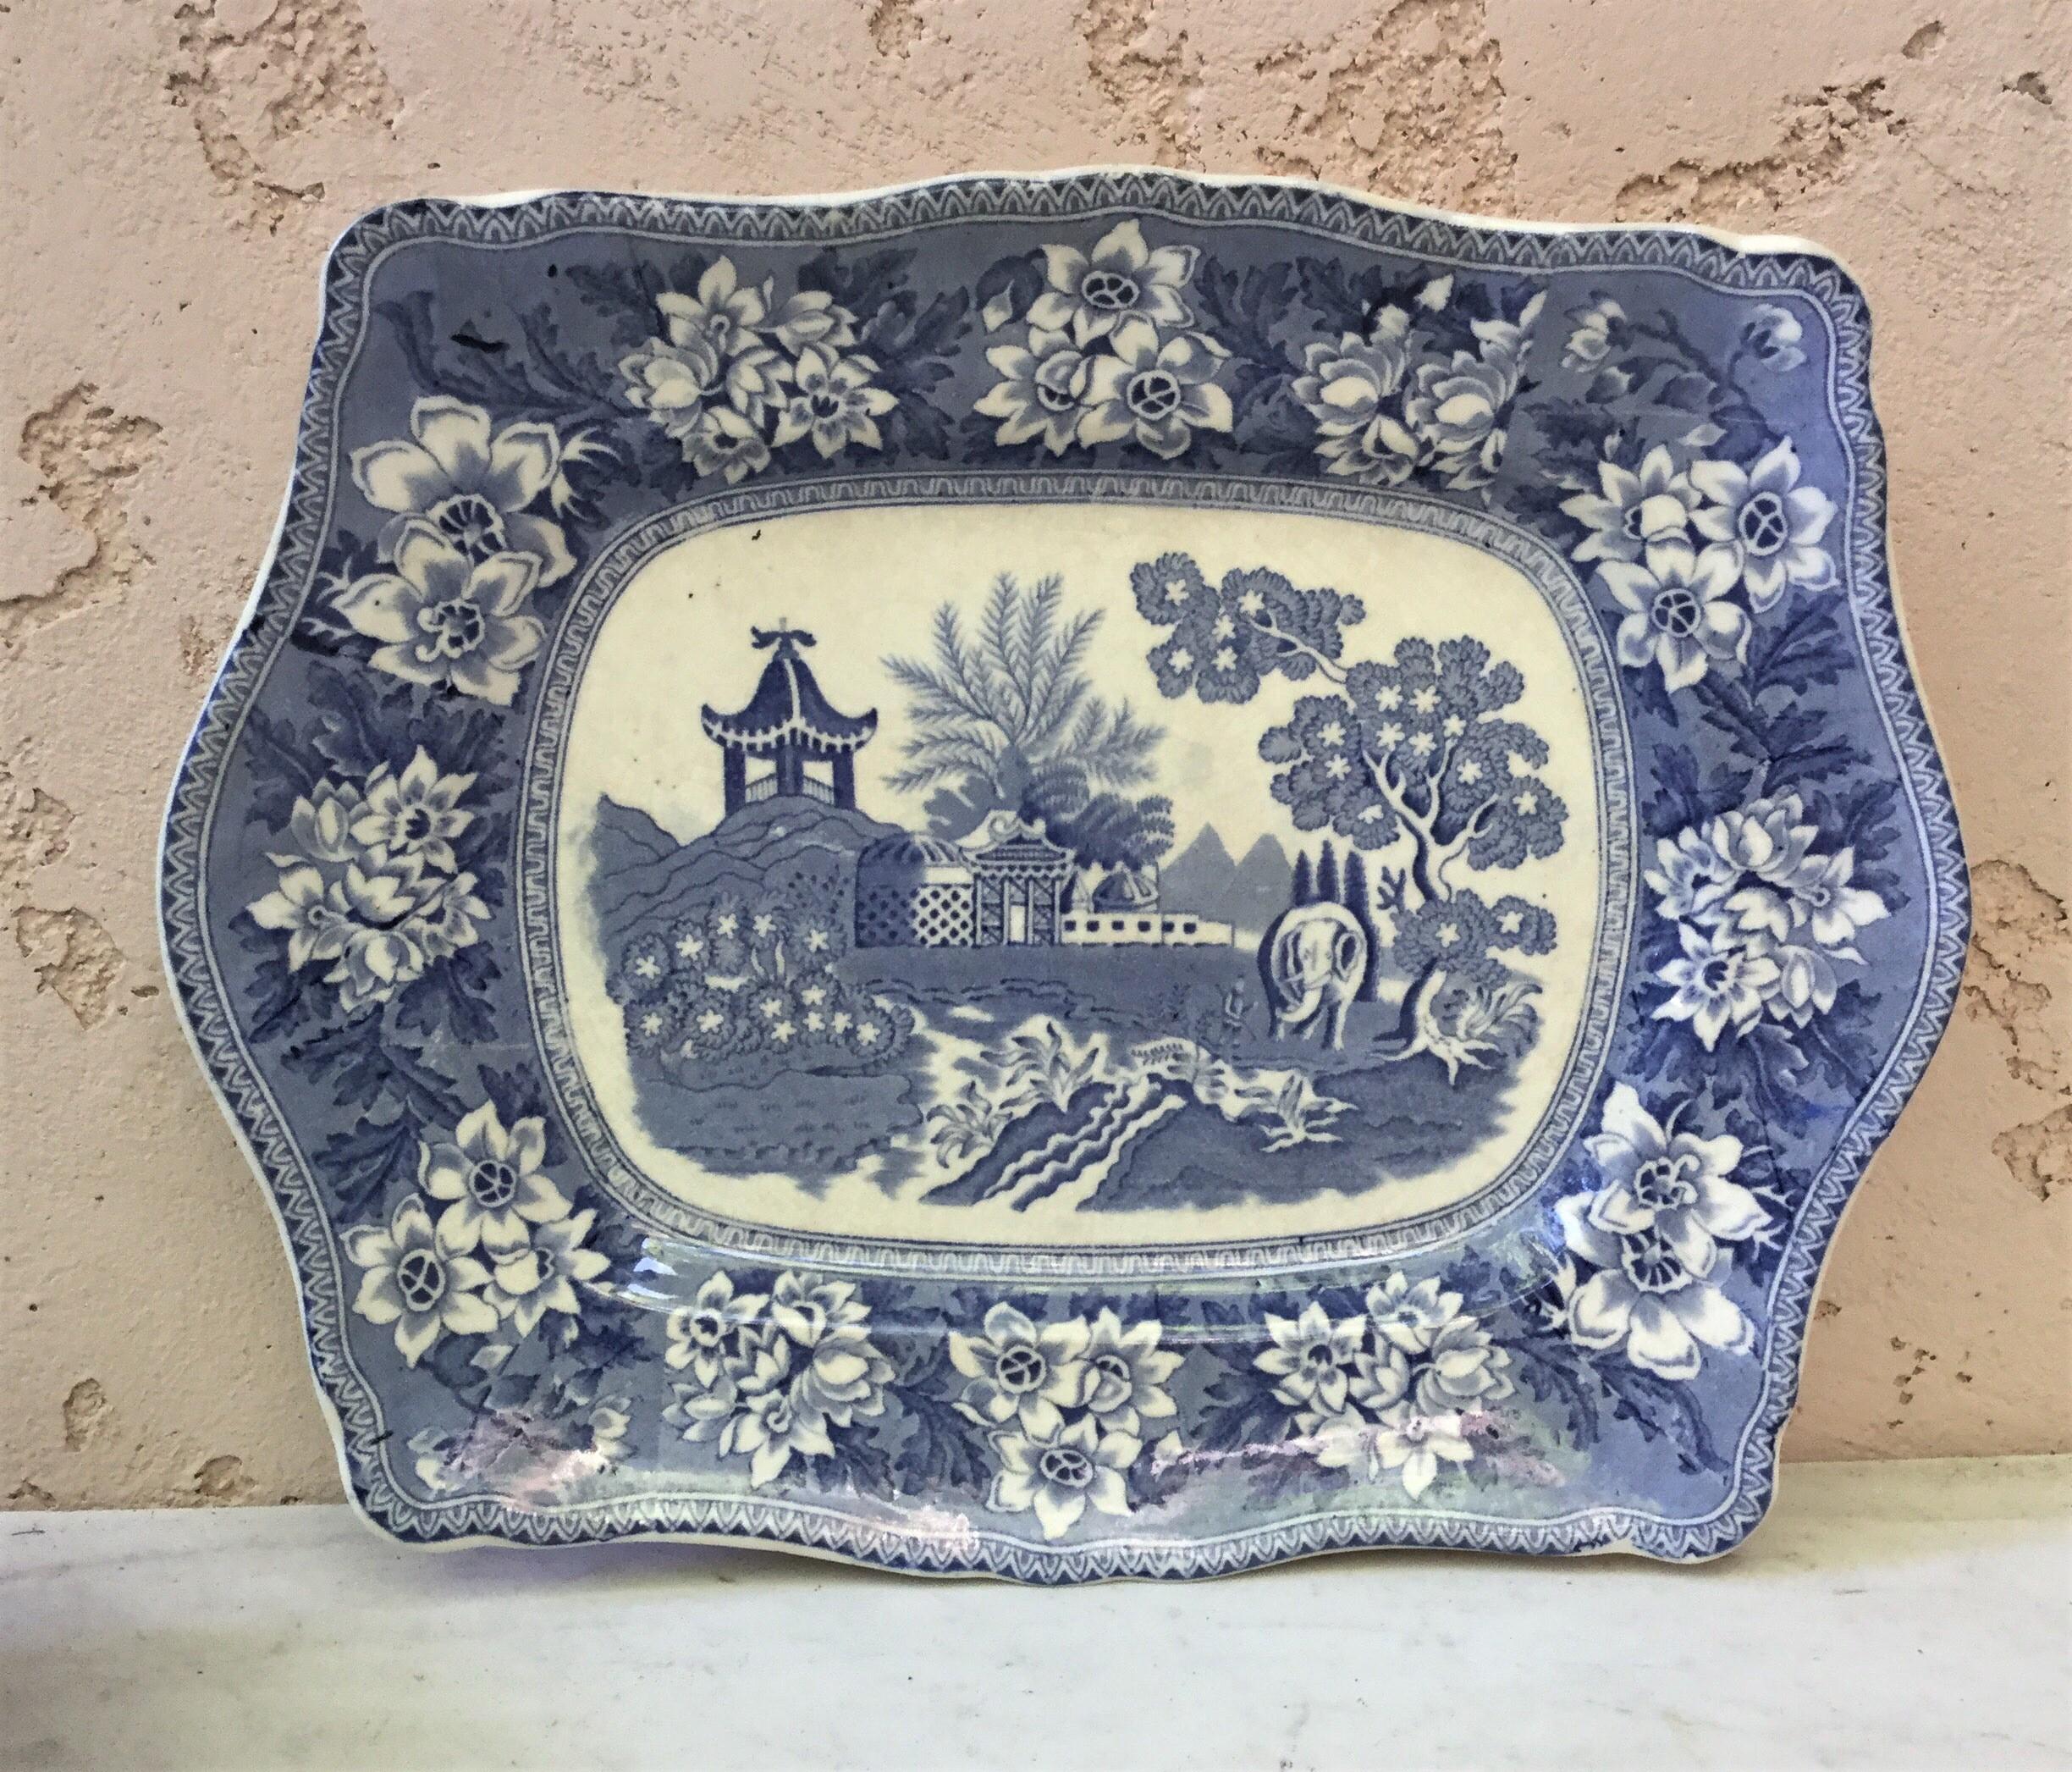 Rare set of three English blue and white platters signed Burslem.
1780 pattern Pagoda/elephant.
Small 11.5